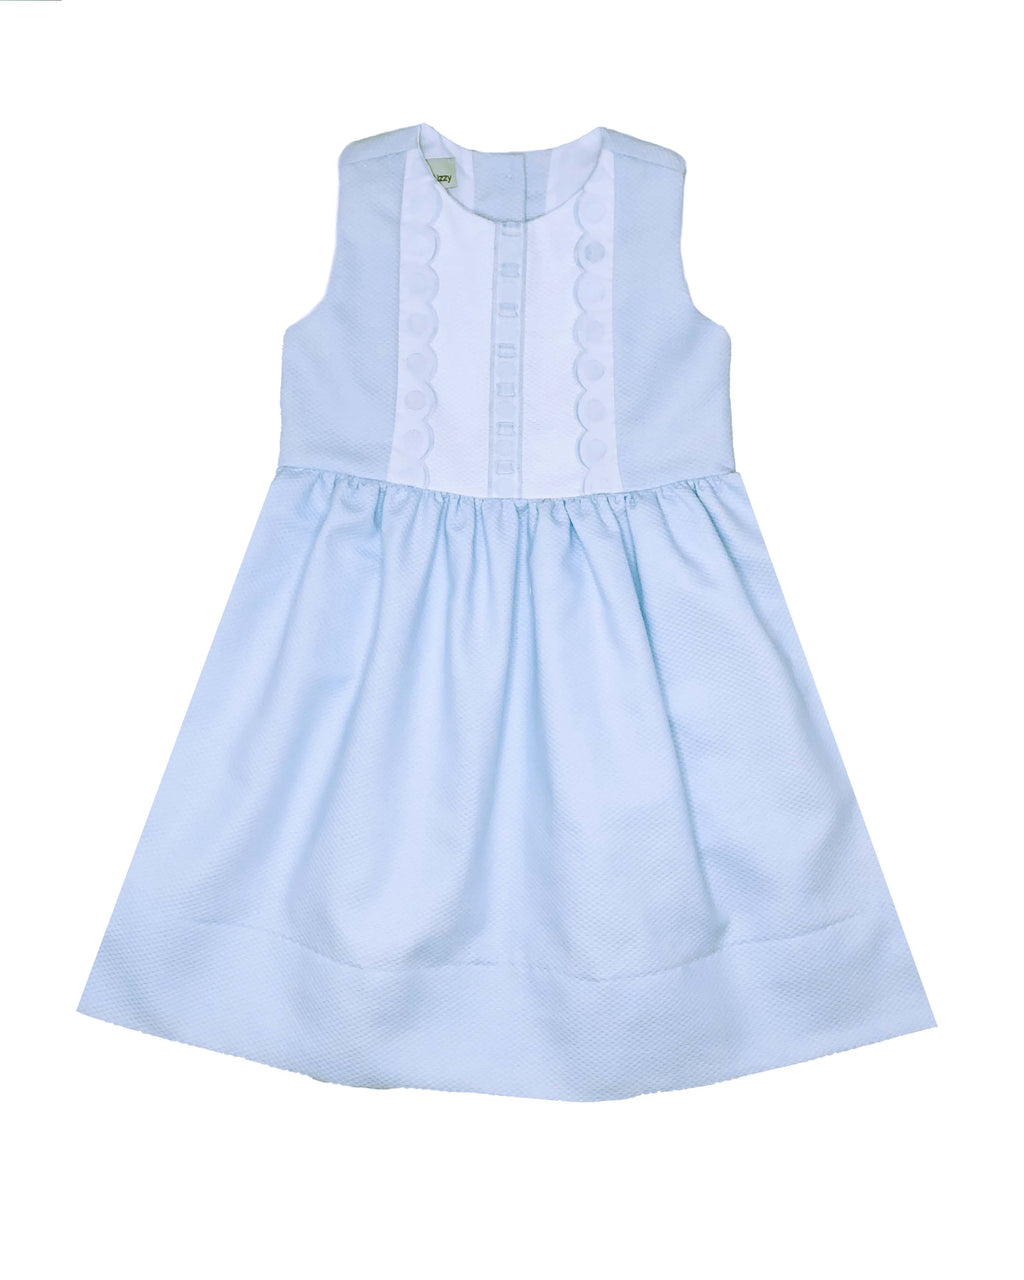 Girl's "Blue and White" Sleeveless Pique Dress - Little Threads Inc. Children's Clothing